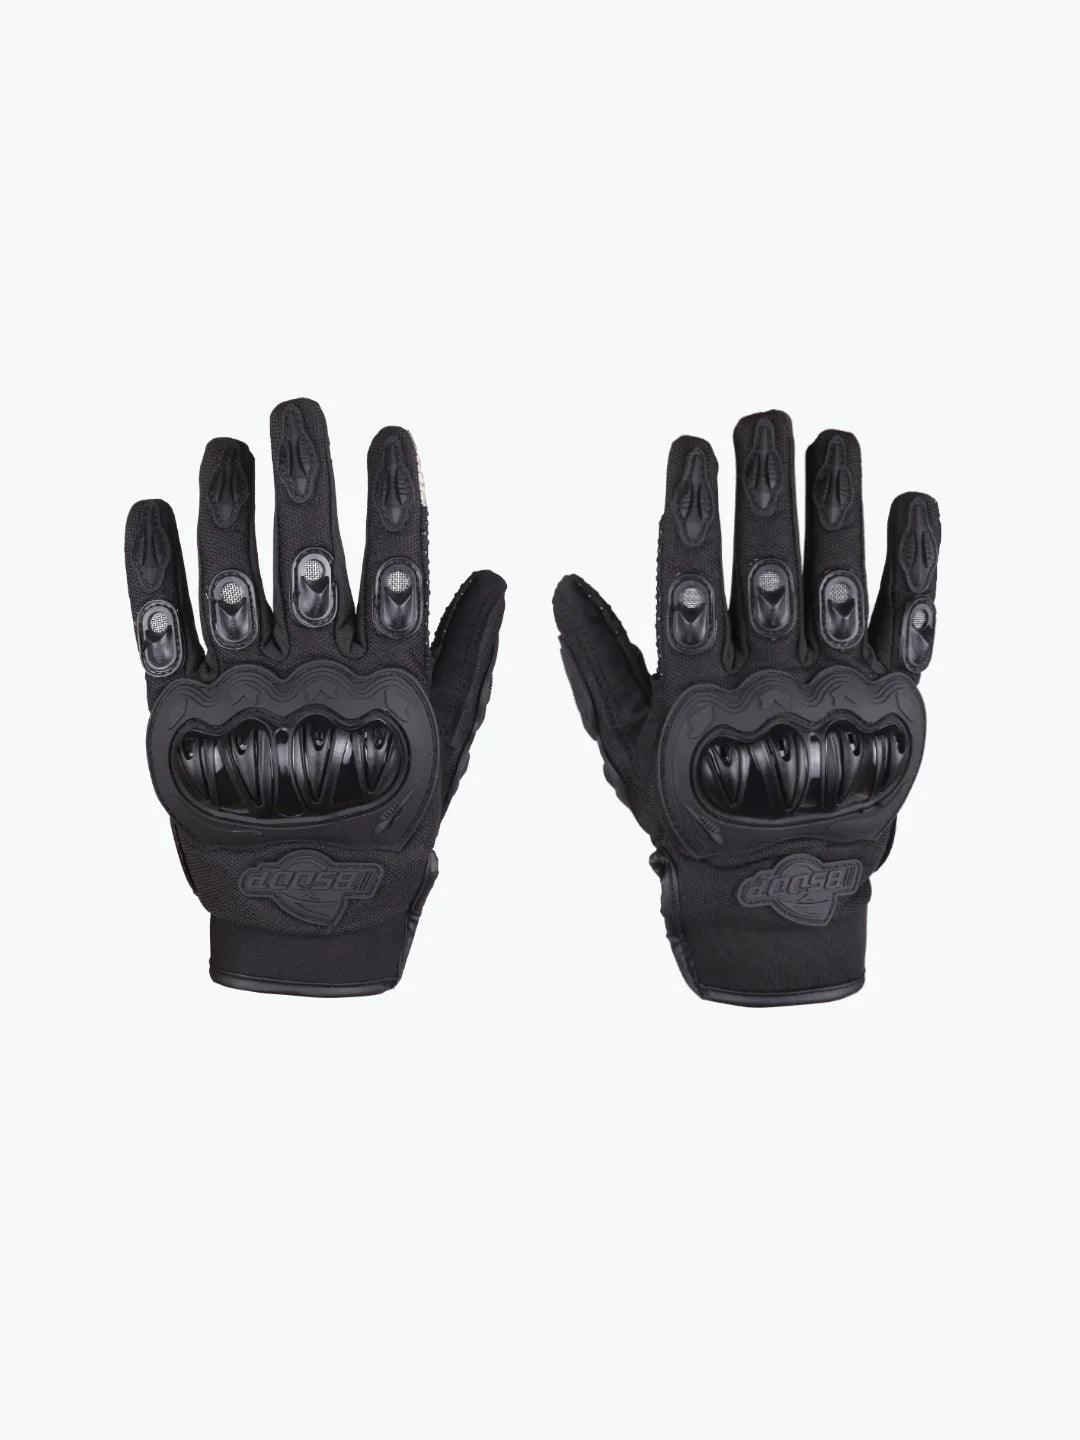 BSDDP Gloves A0107 Black M - Moto Modz